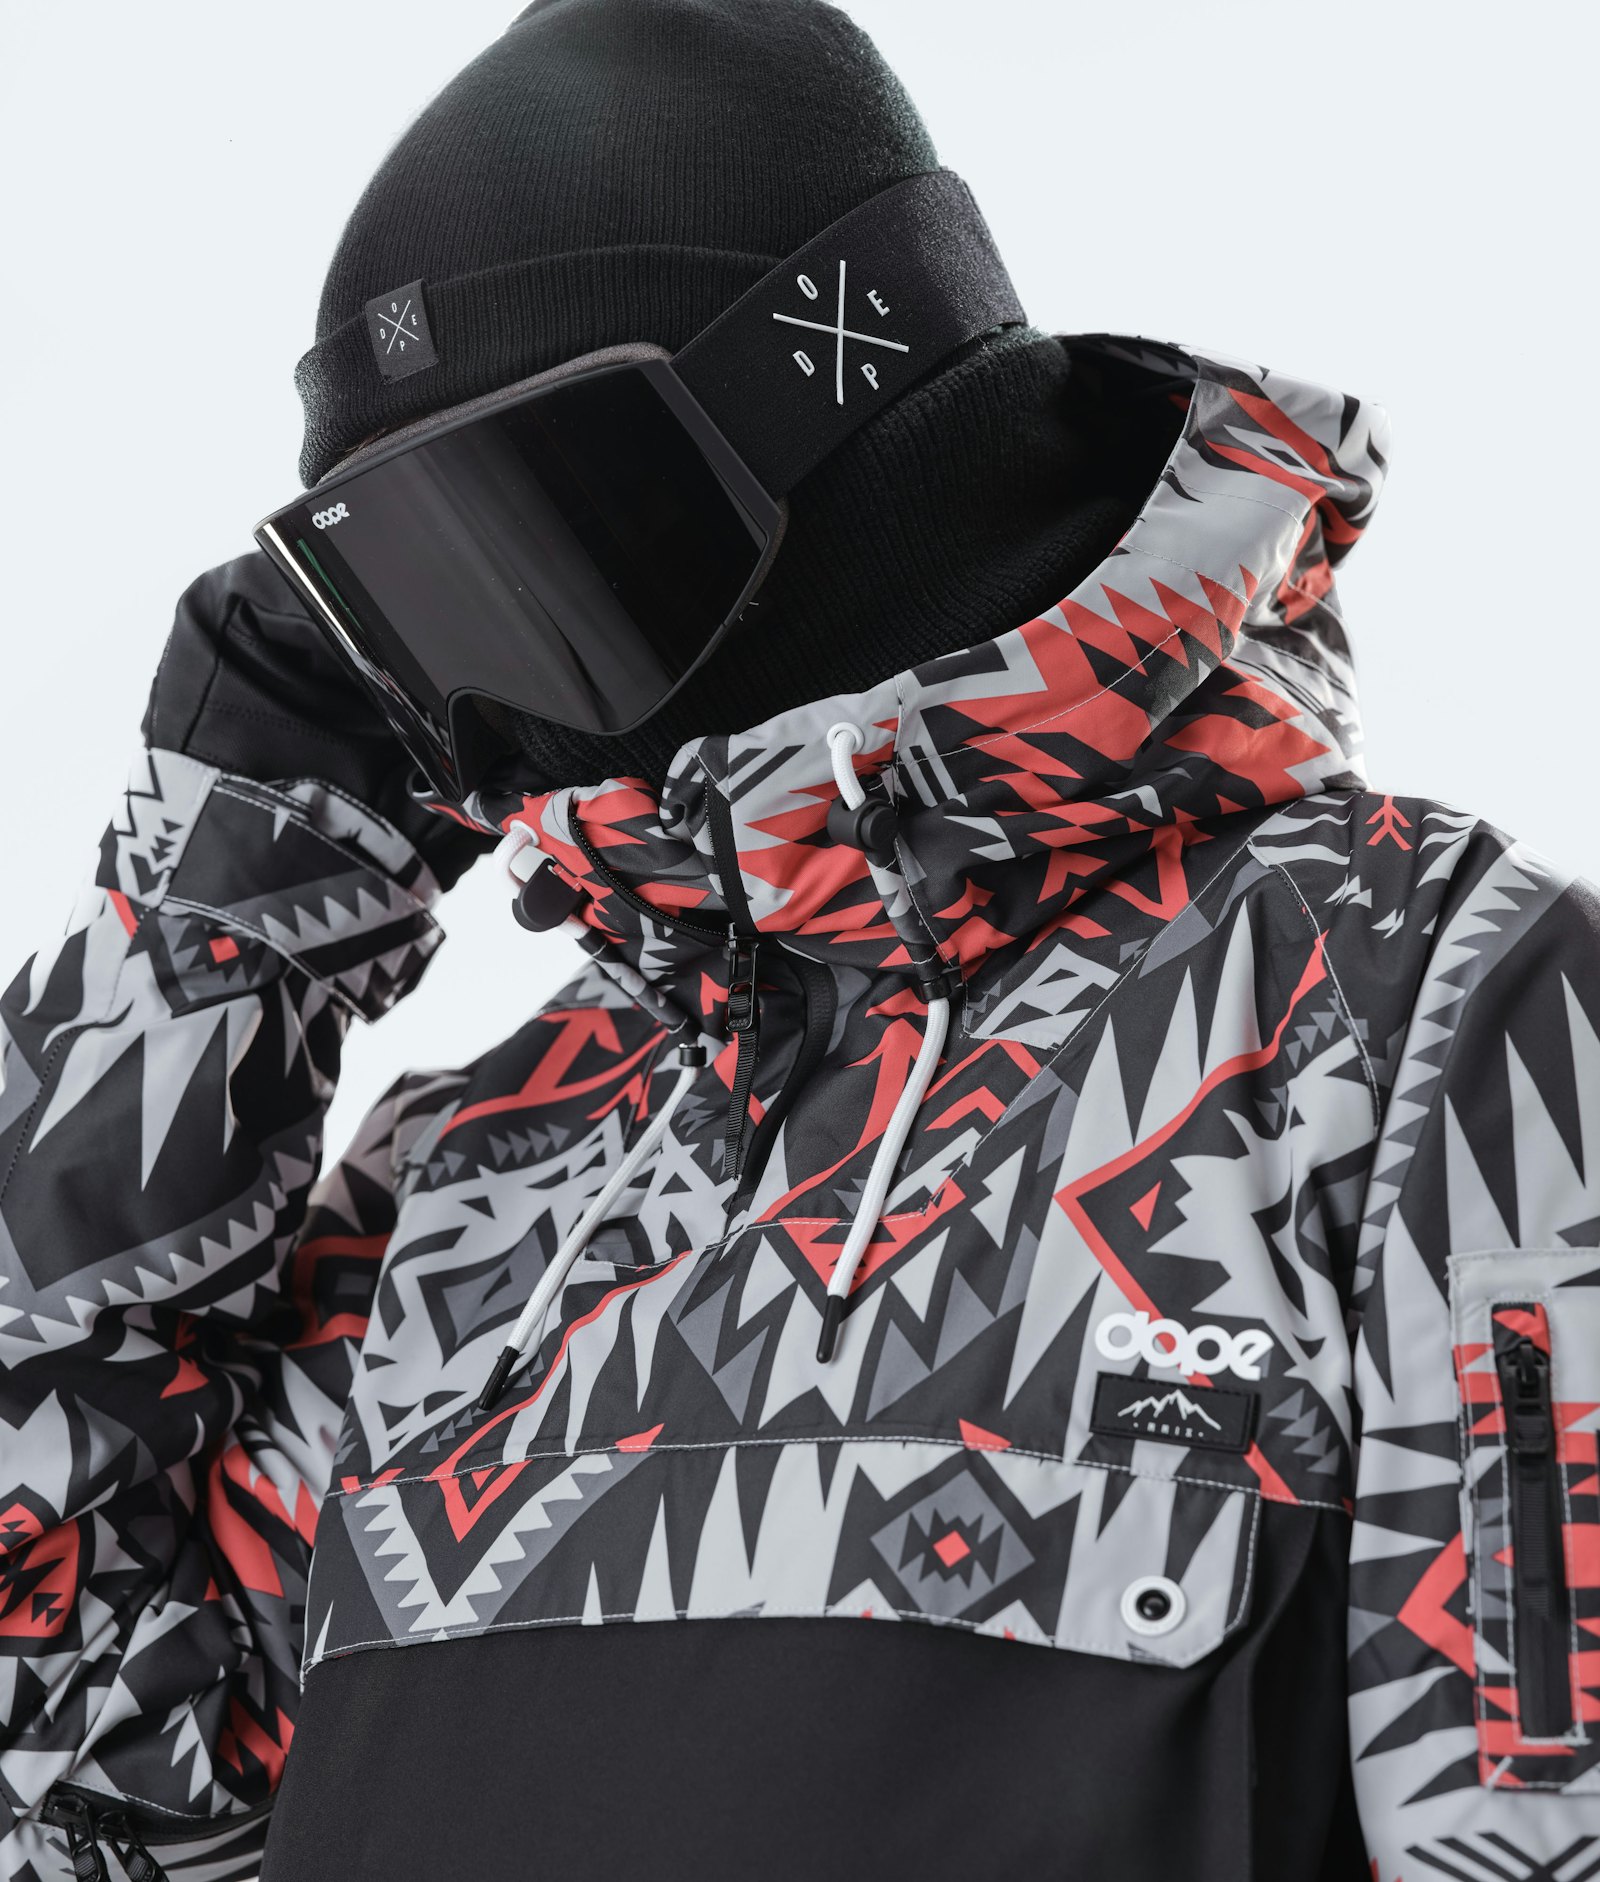 Annok 2020 Ski Jacket Men Arrow Red/Black